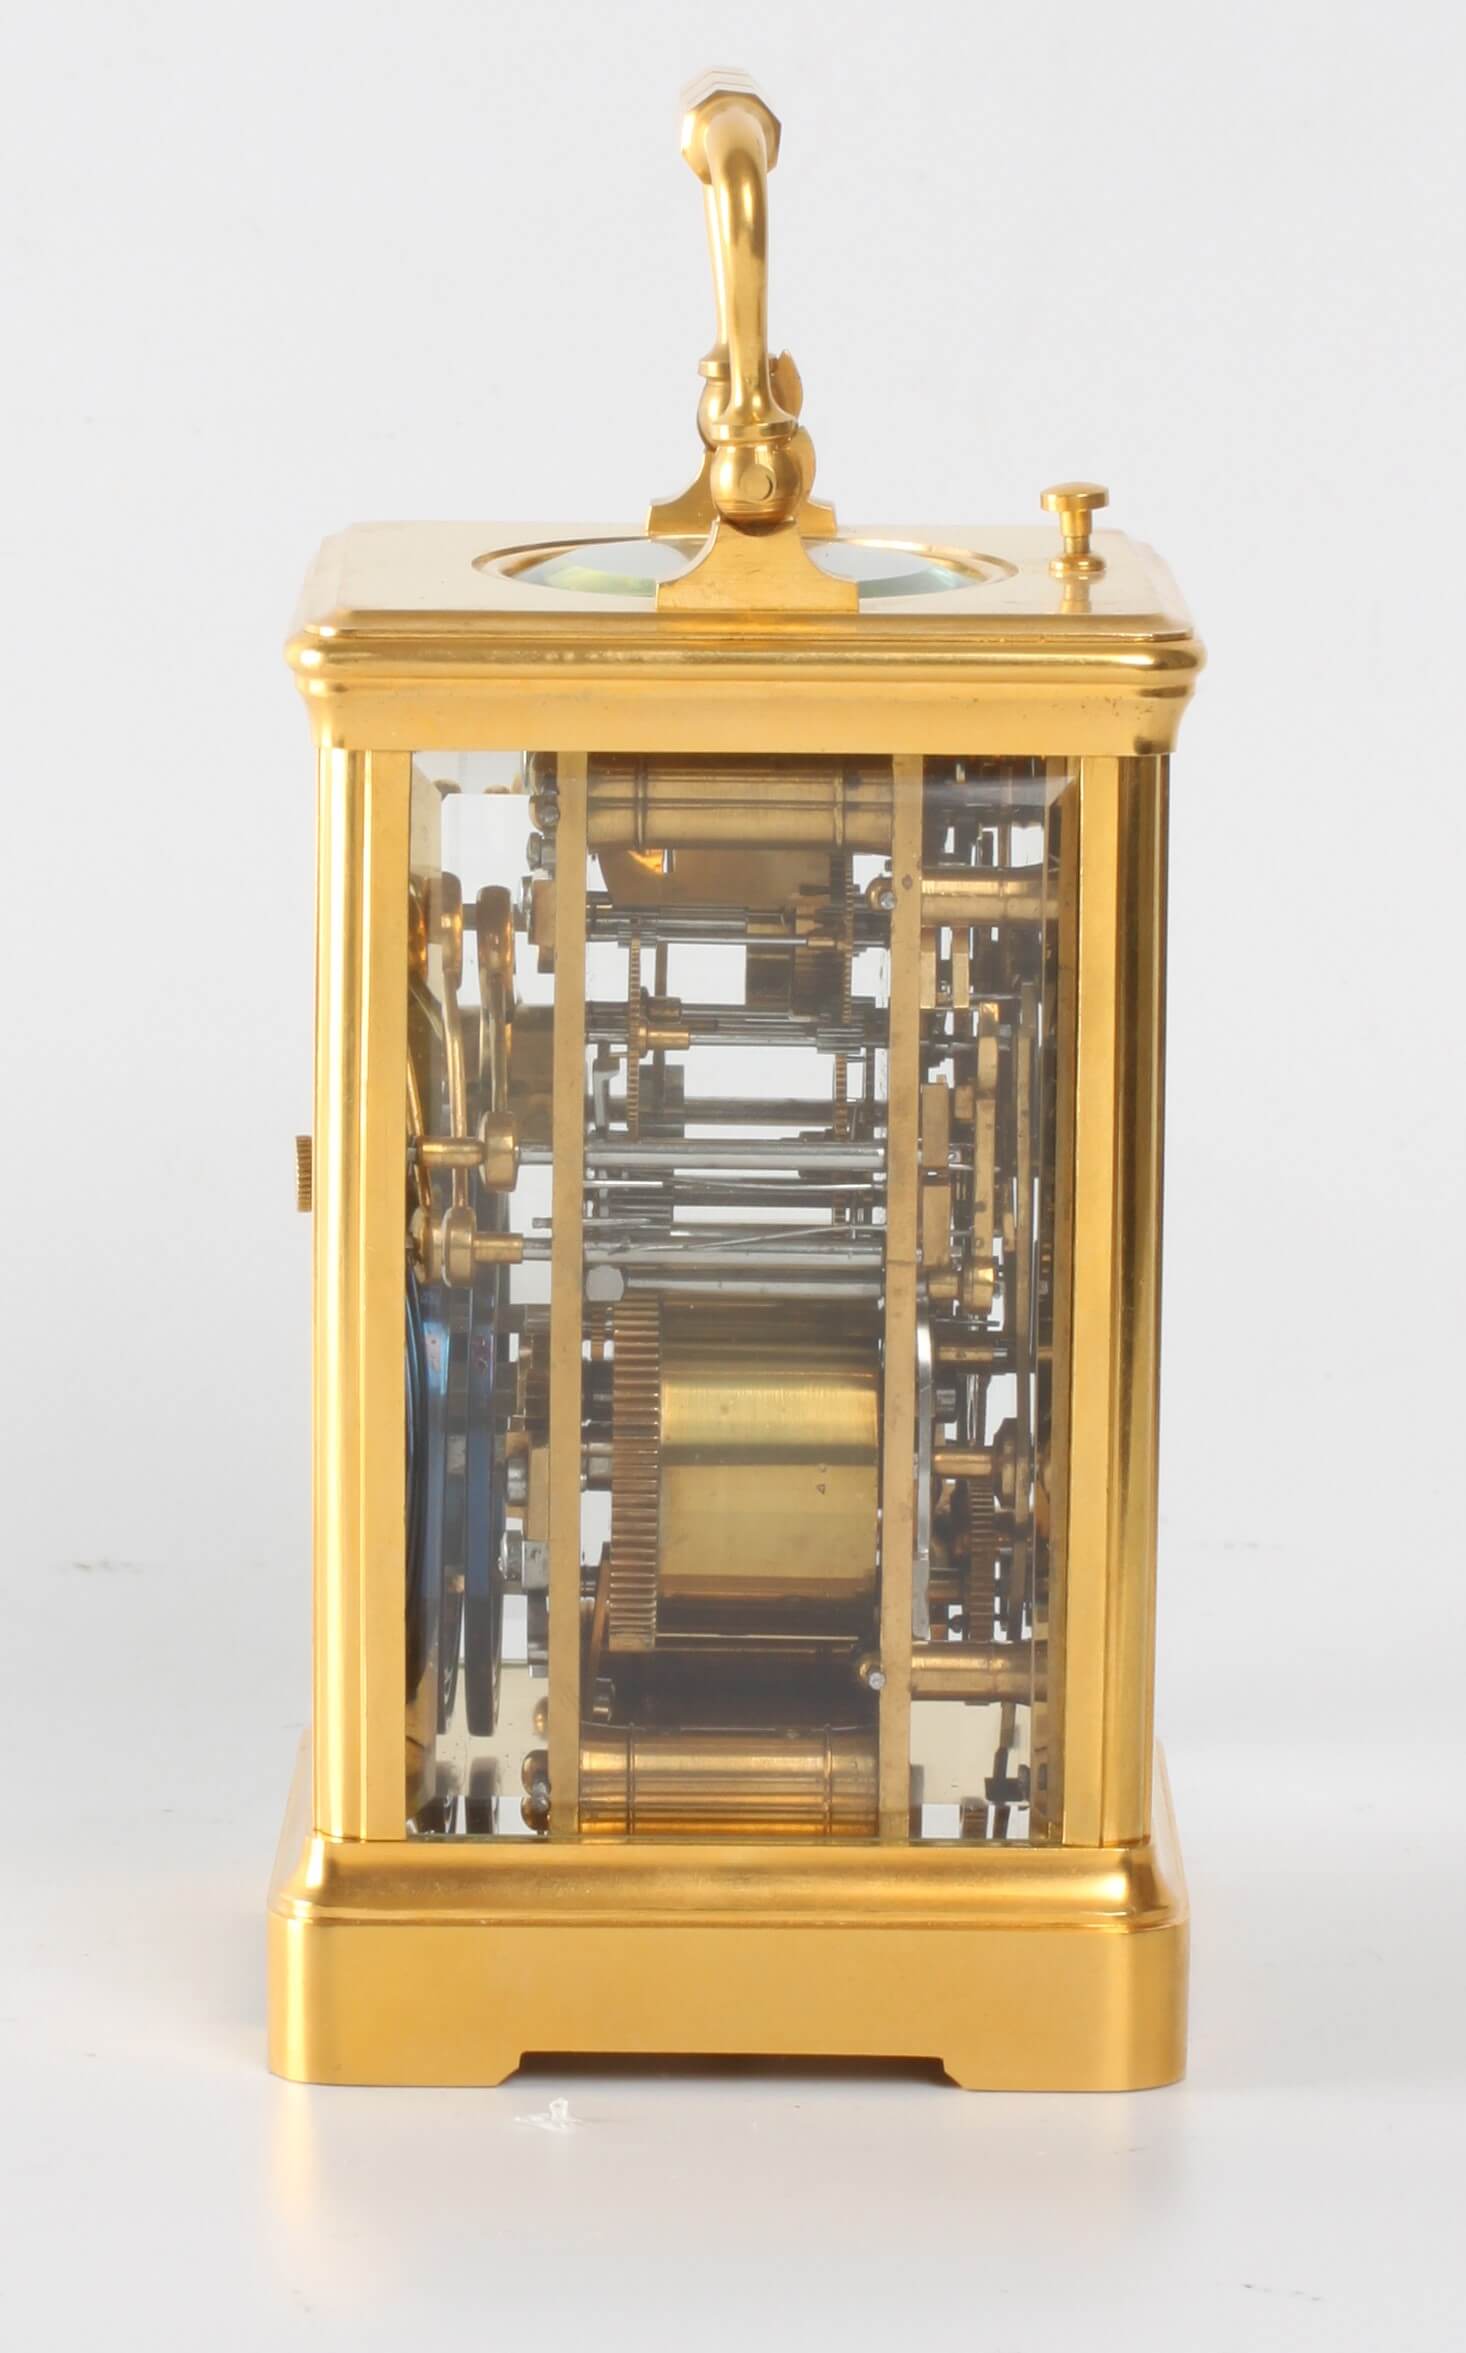 Frenchgilt quarter striking corniche carriage clock 1880